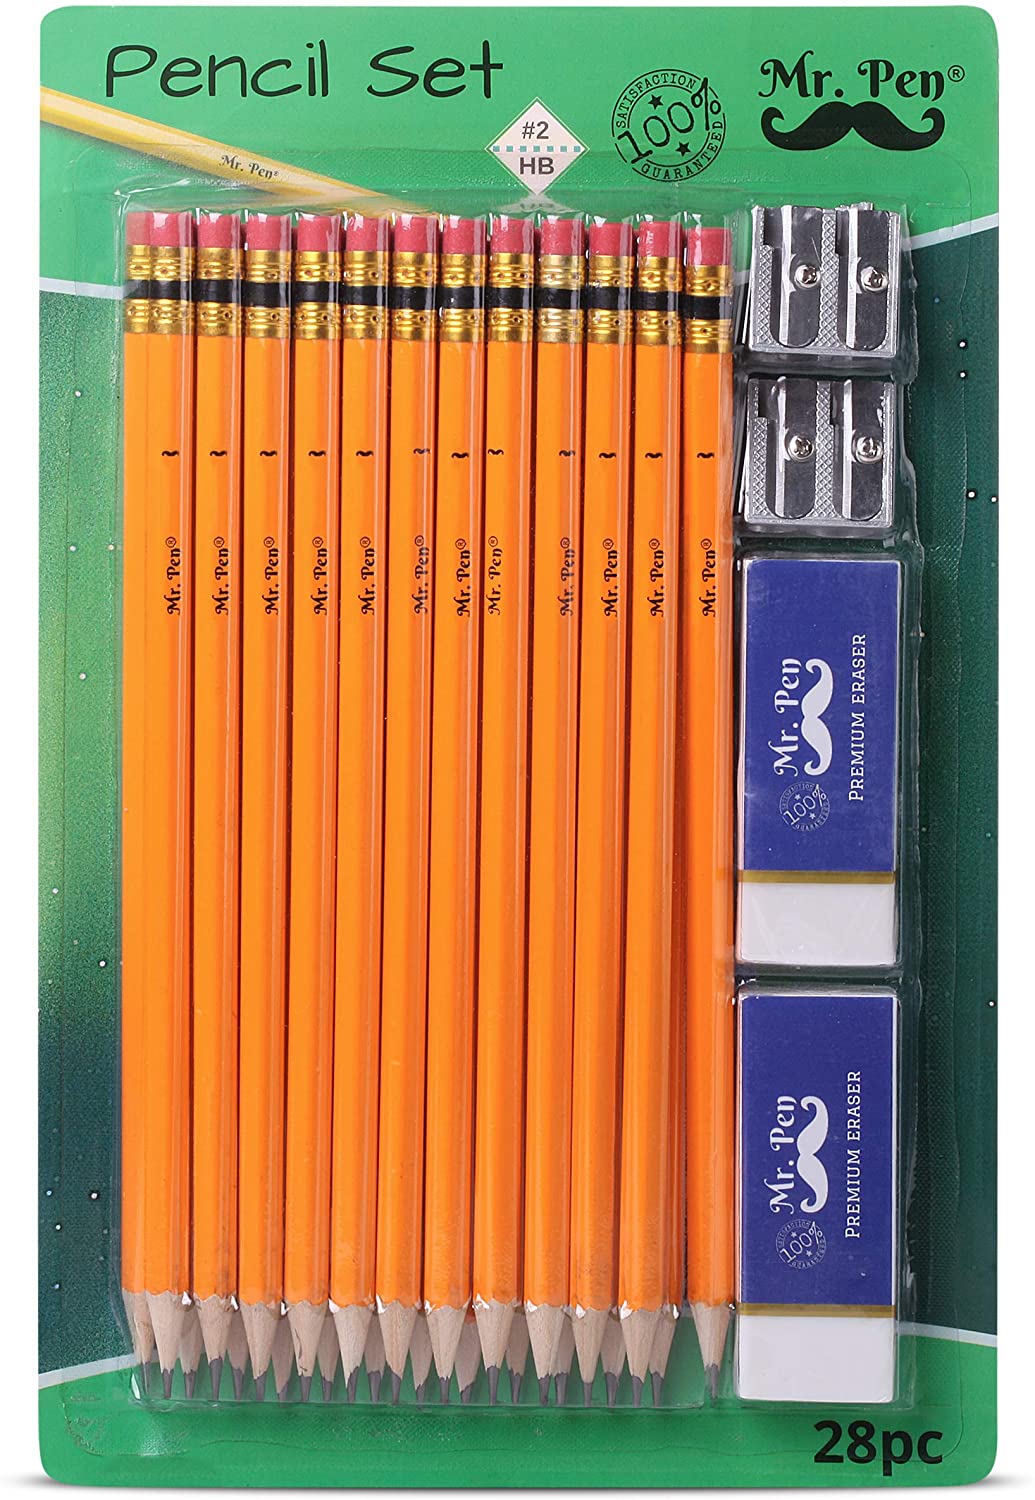 Pencils with Sharpener and Eraser, 24 Pencils, 2 Metal Pencil Sharpeners, 2 Erasers, Pencils and Sharpener, Pencil and Sharpener Set, School Supplies, Pencil with Sharpener, Erasers for Kids